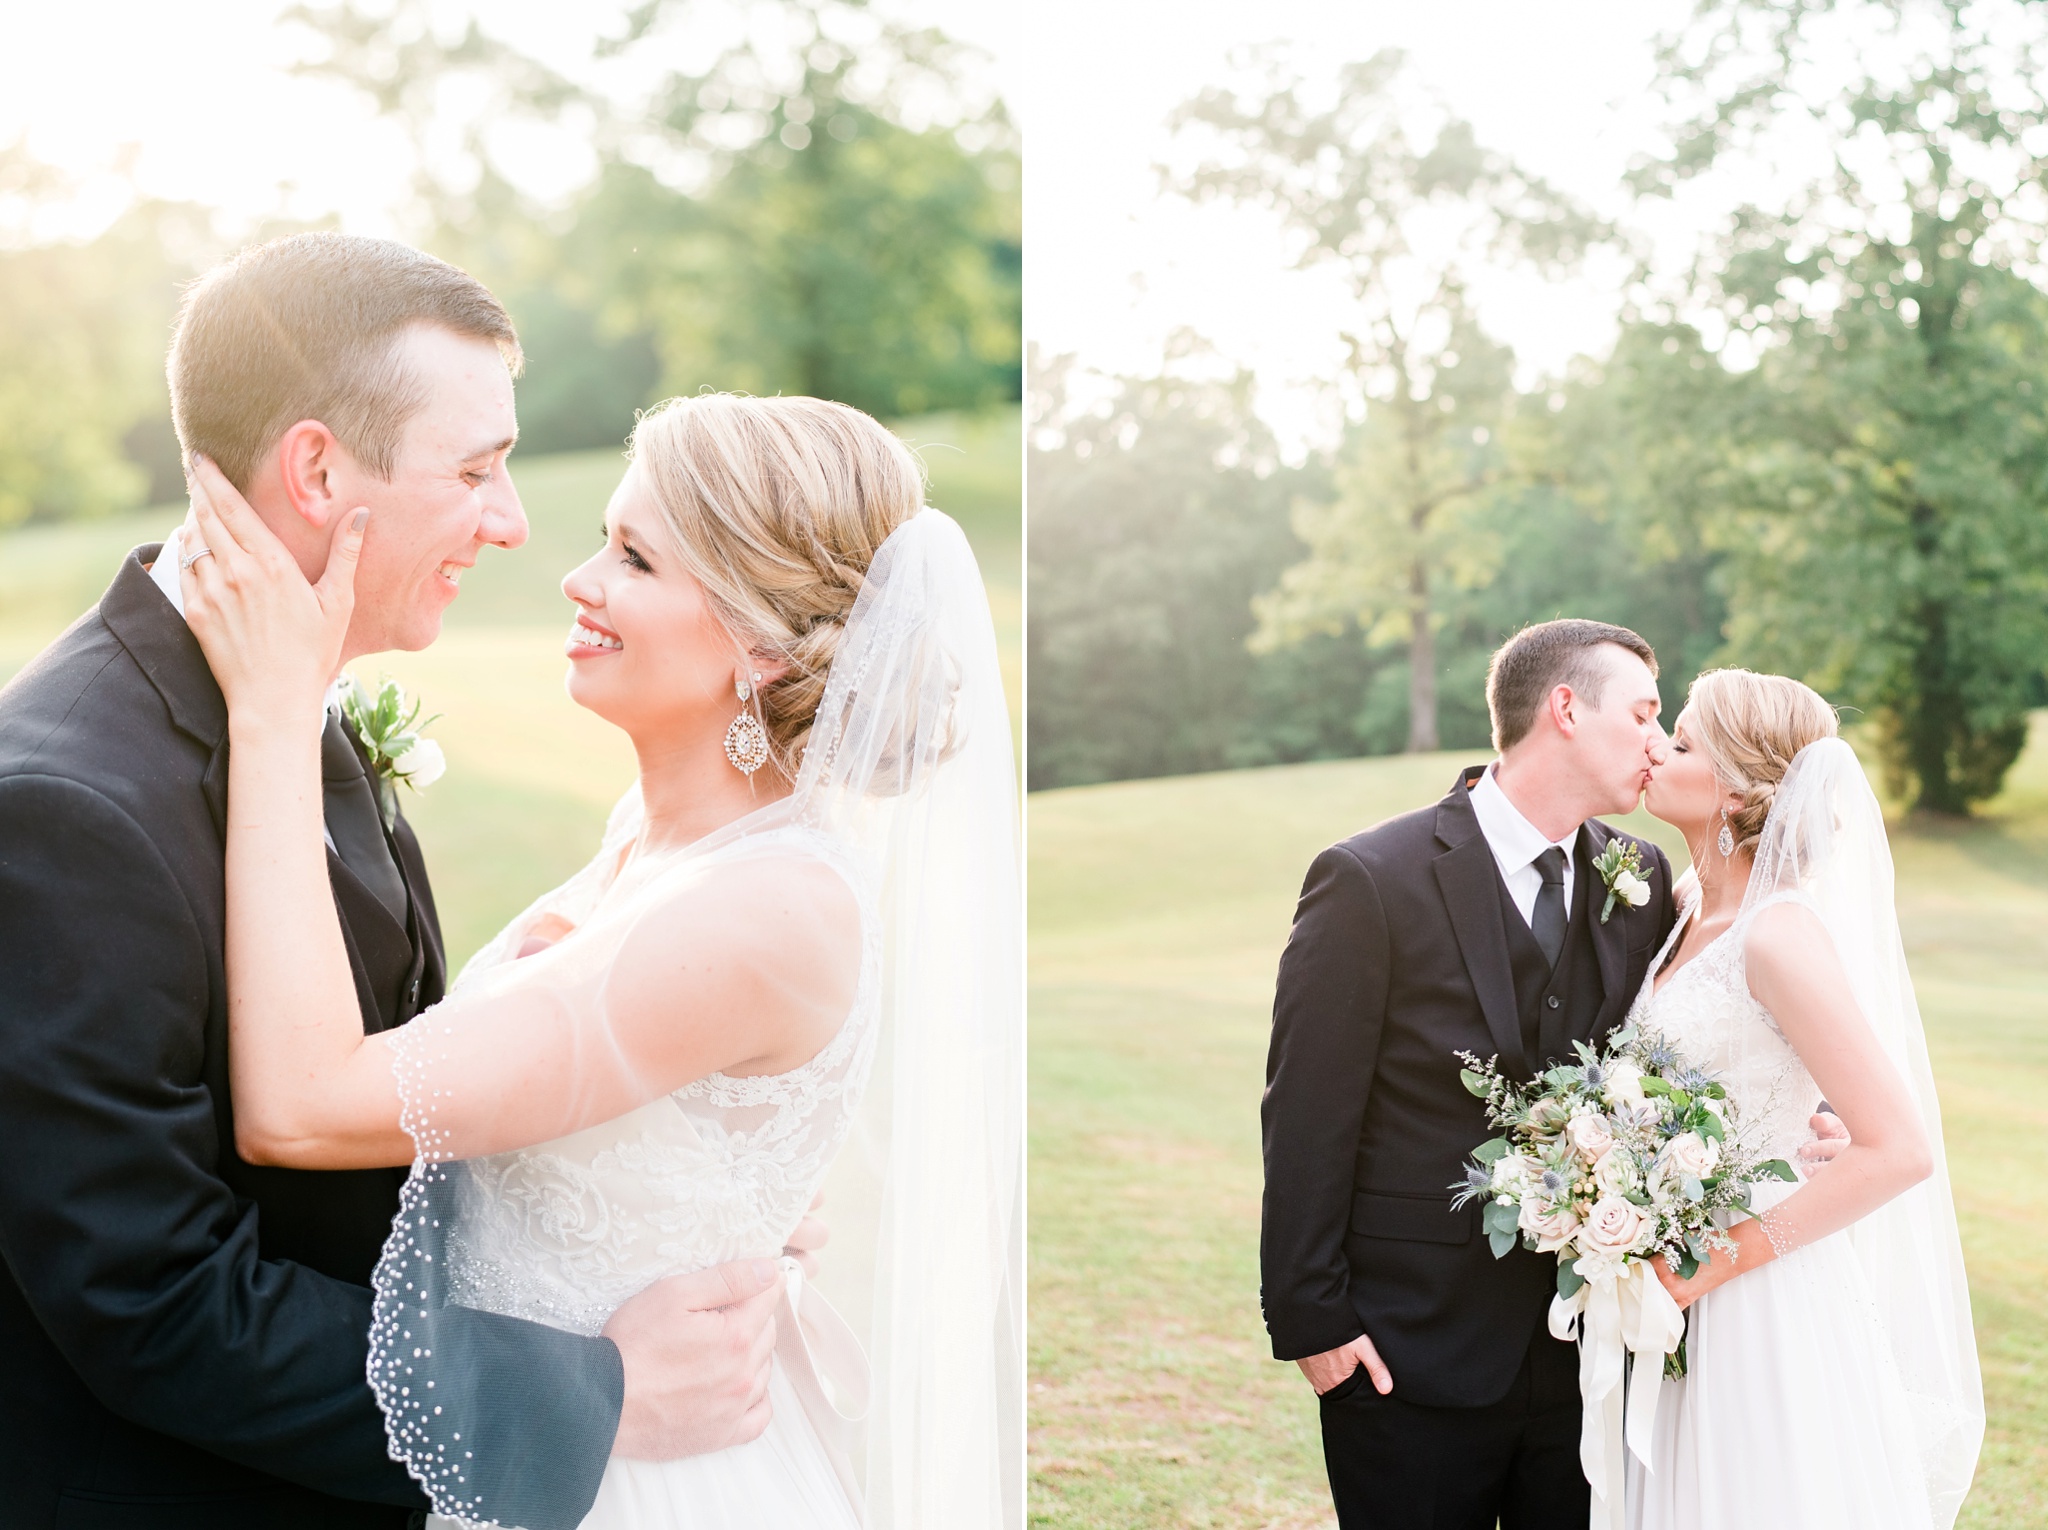 Gray and Black Classic Outdoor Wedding | Birmingham Alabama Wedding Photographers_0044.jpg